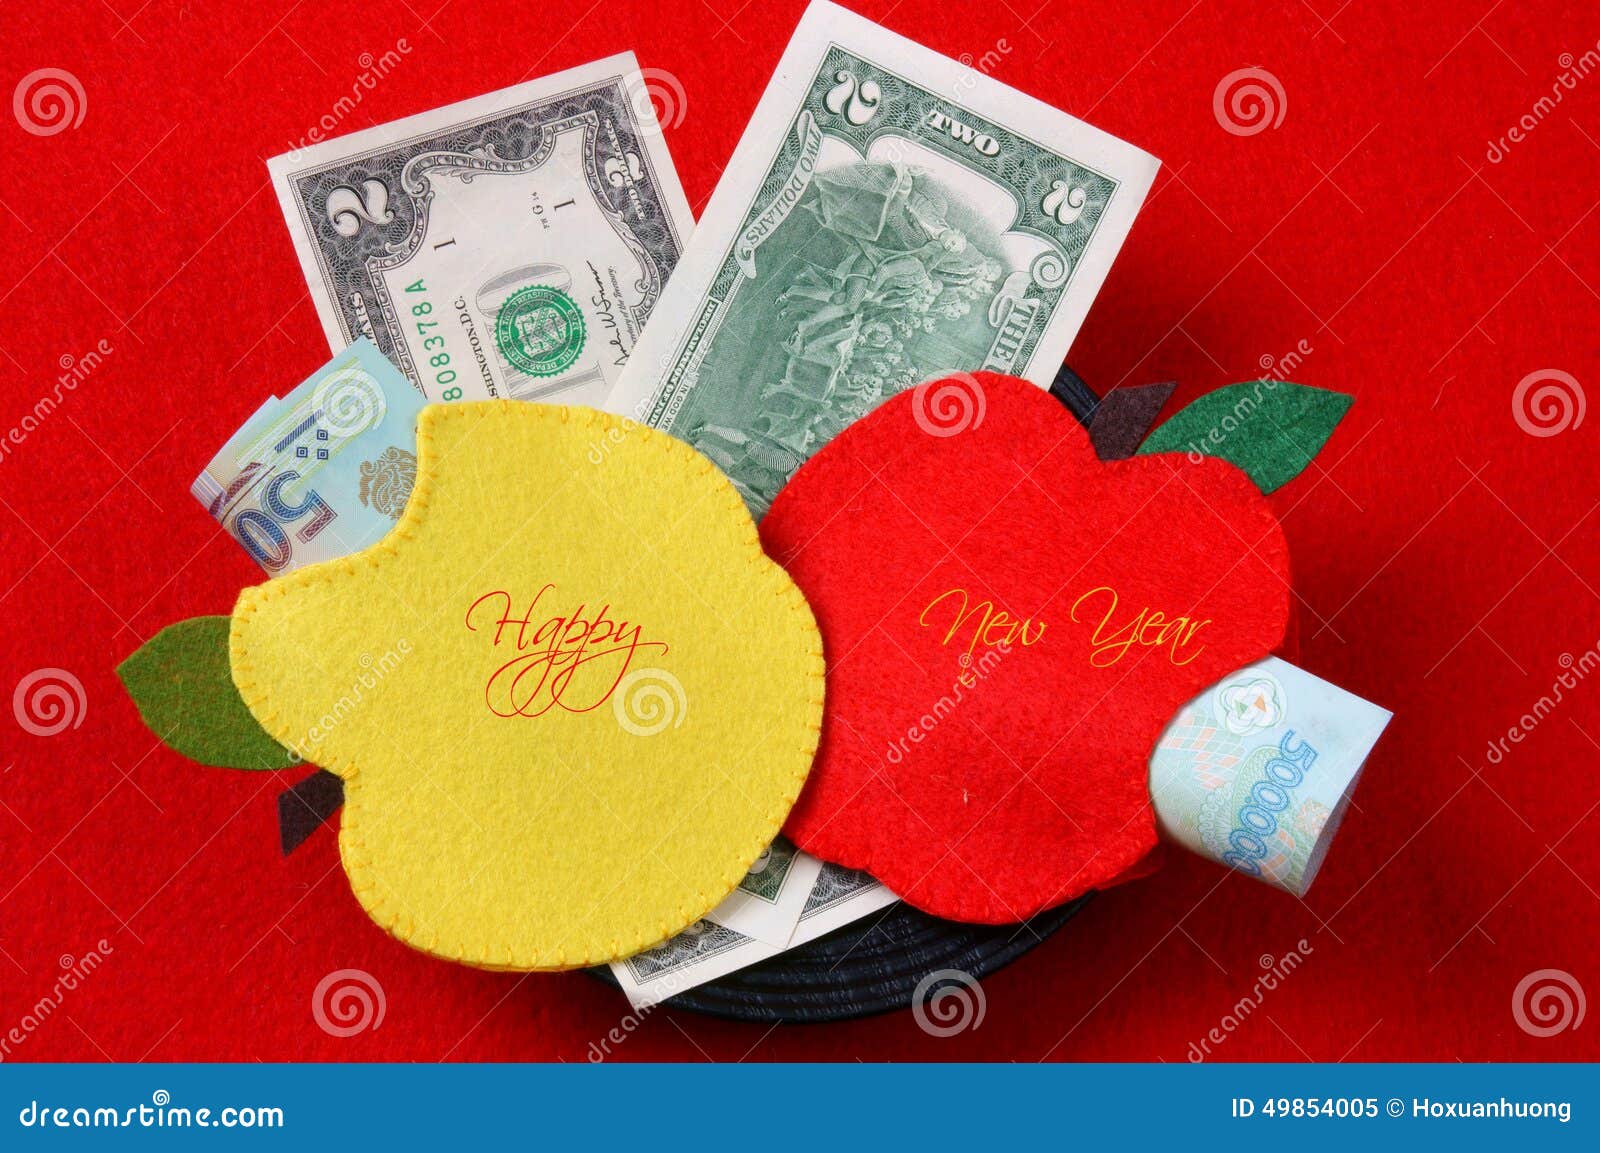 Vietnam Tet, Red Envelope, Lucky Money Stock Image - Image of money,  impression: 49854005